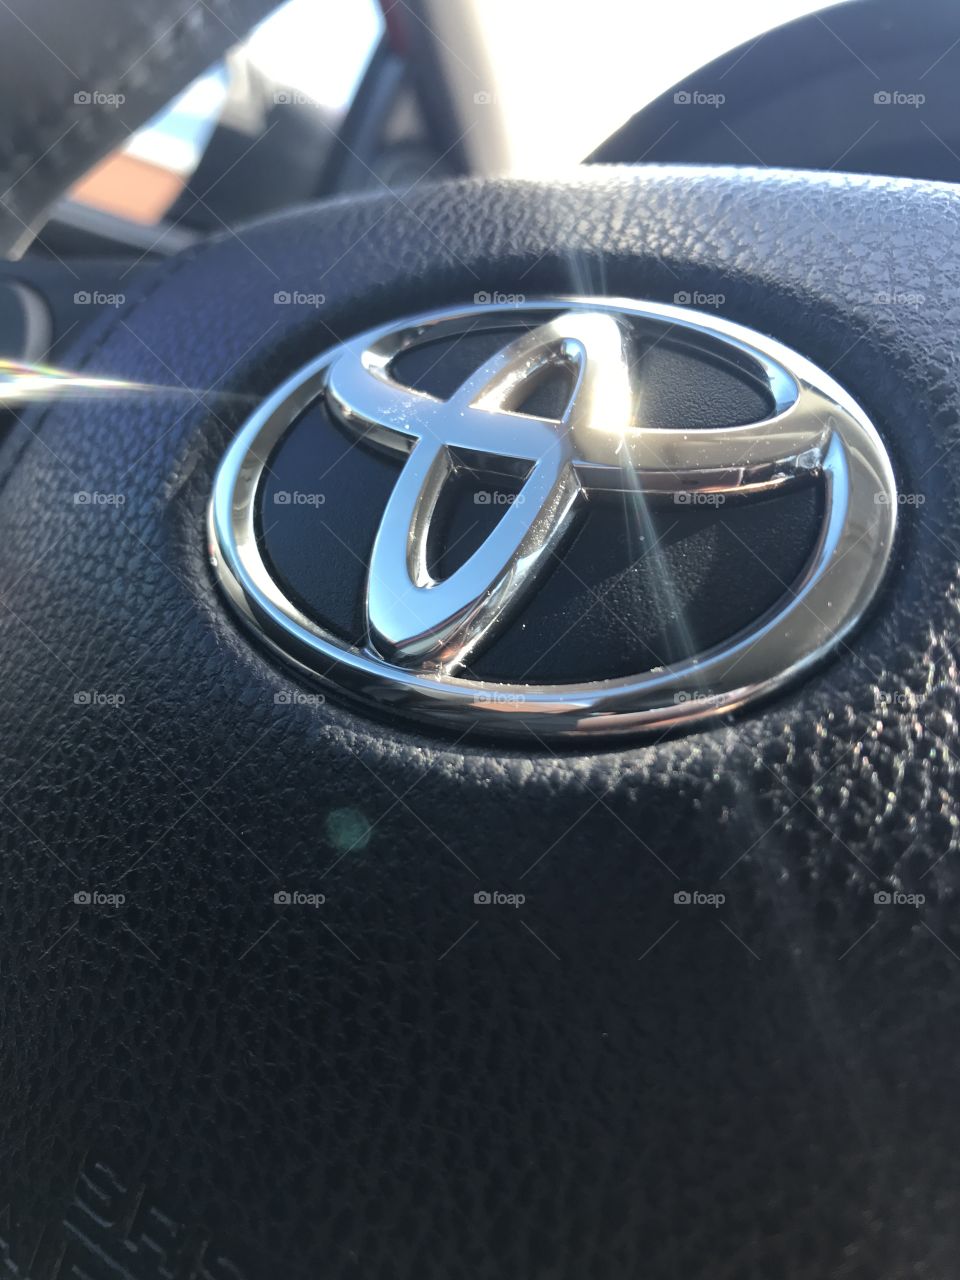 Toyota steering wheel 